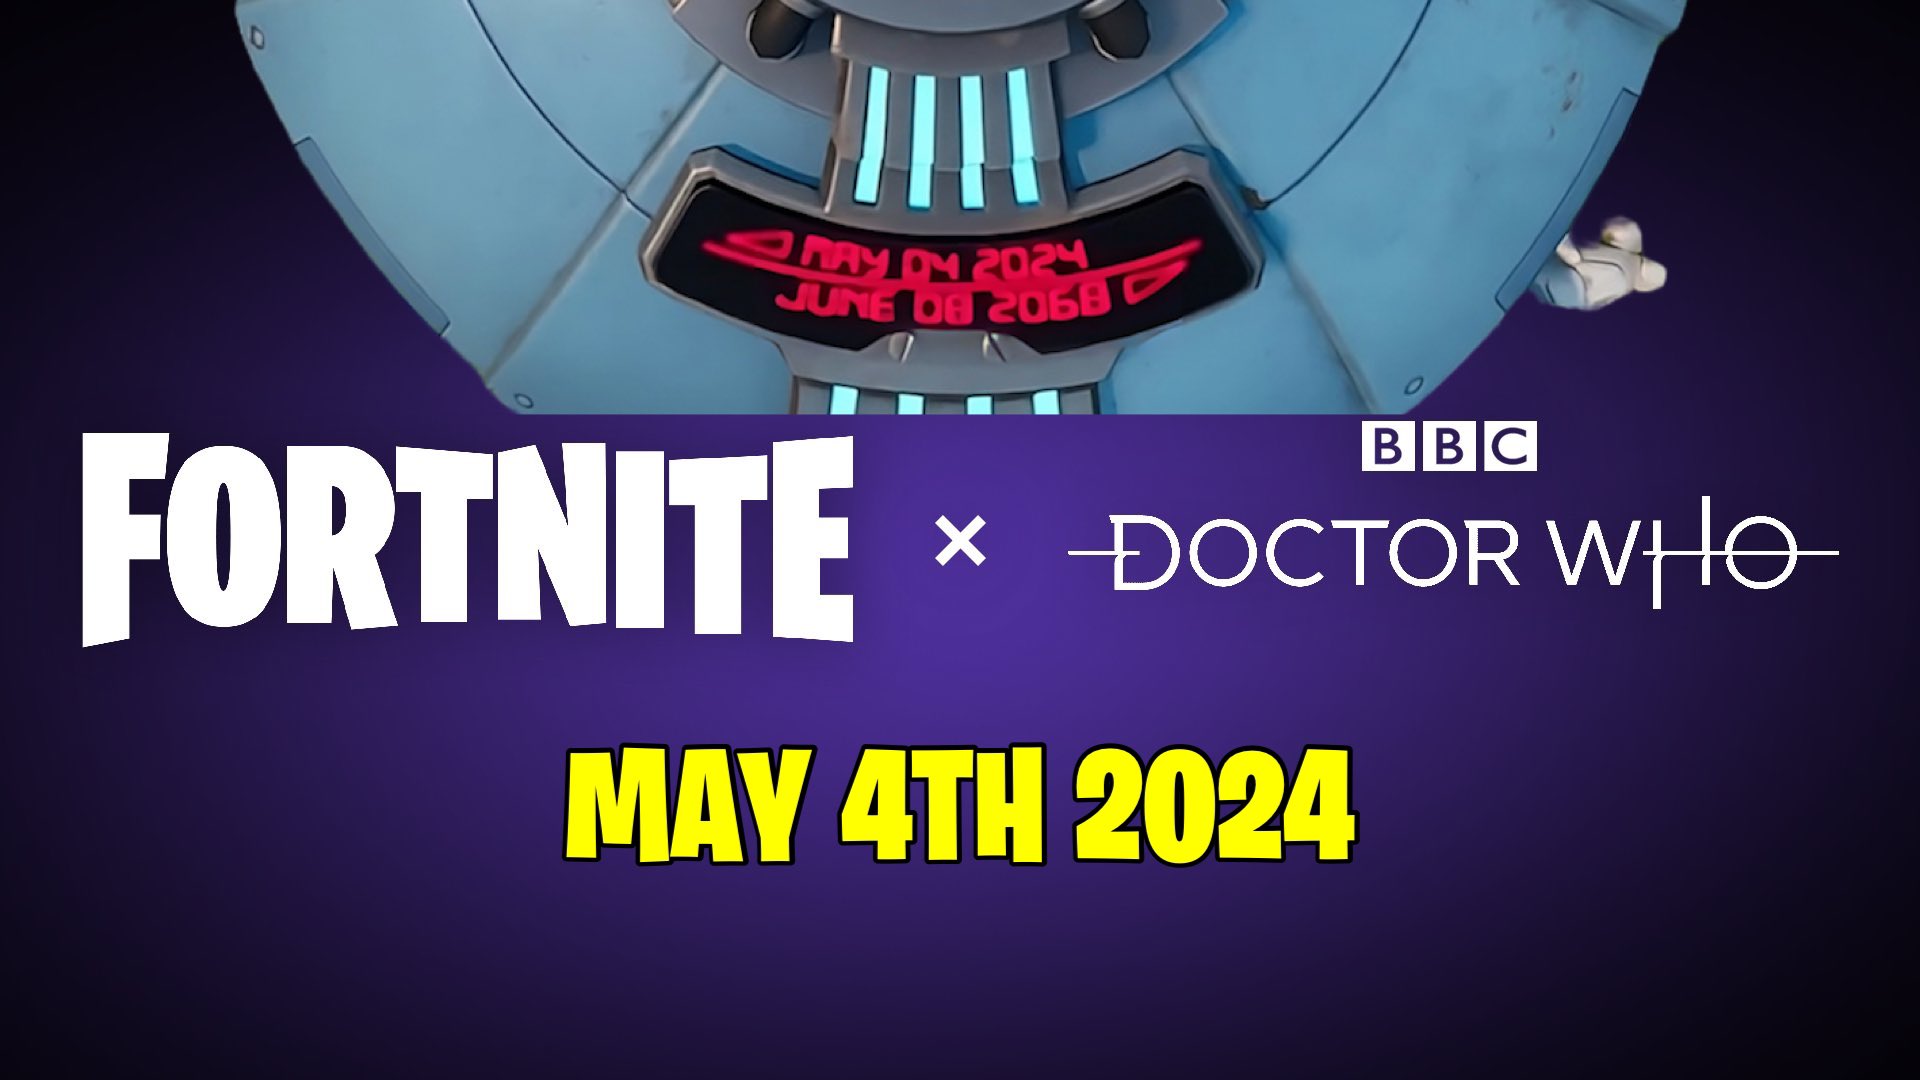 Fortnite leak: Doctor Who set to time-travel into Fortnite soon